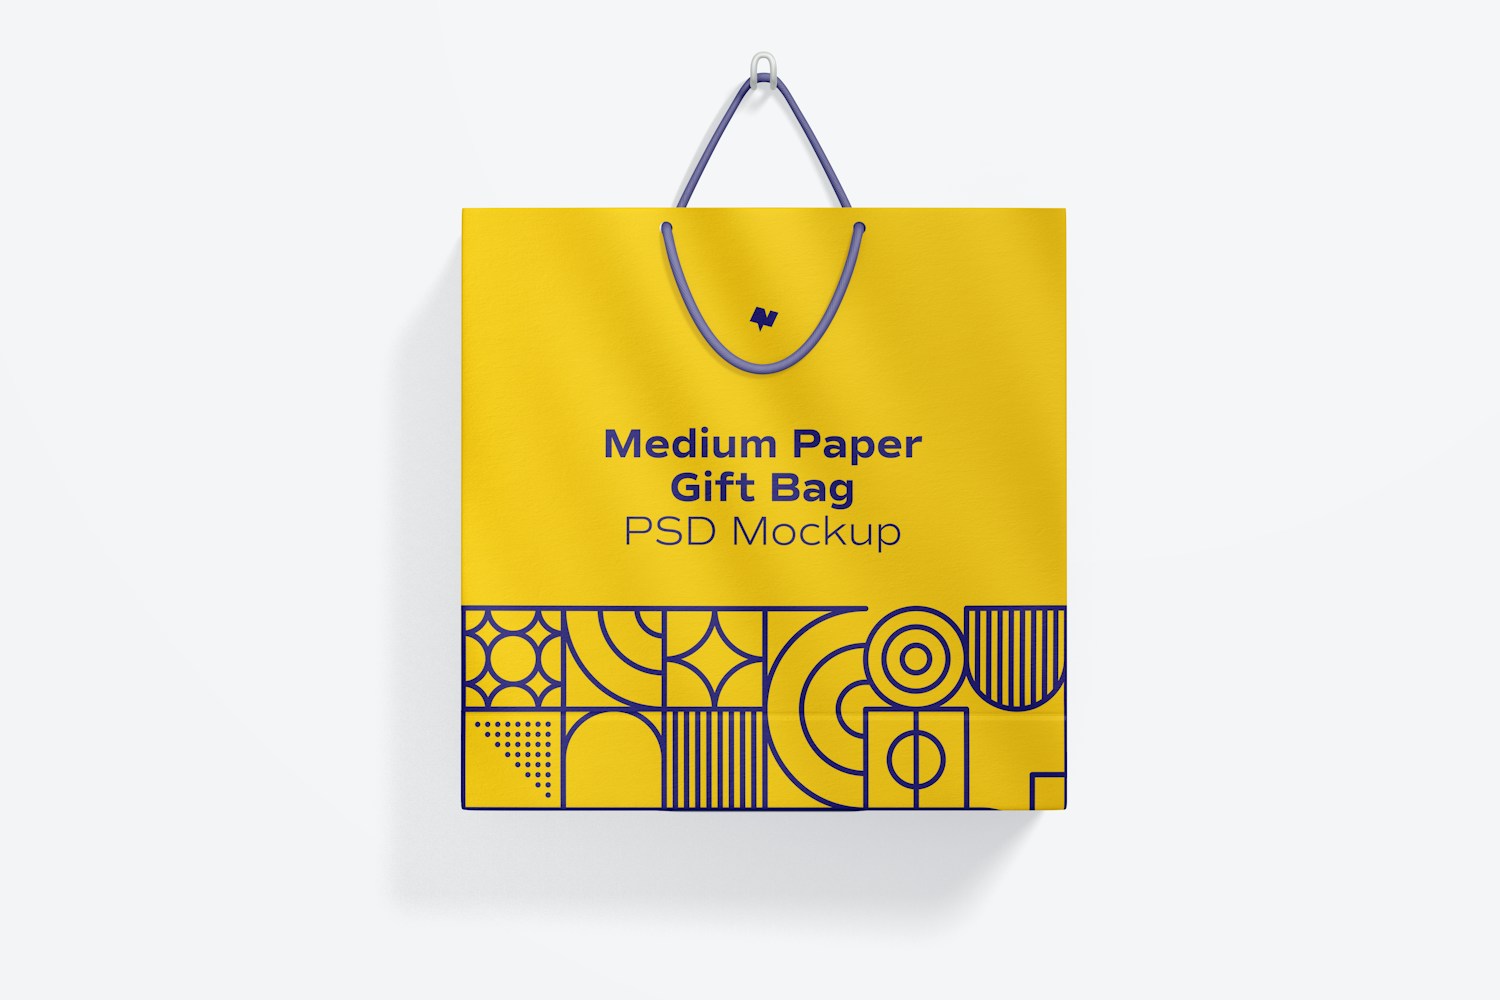 Medium Paper Gift Bag With Rope Handle Mockup, Hanging